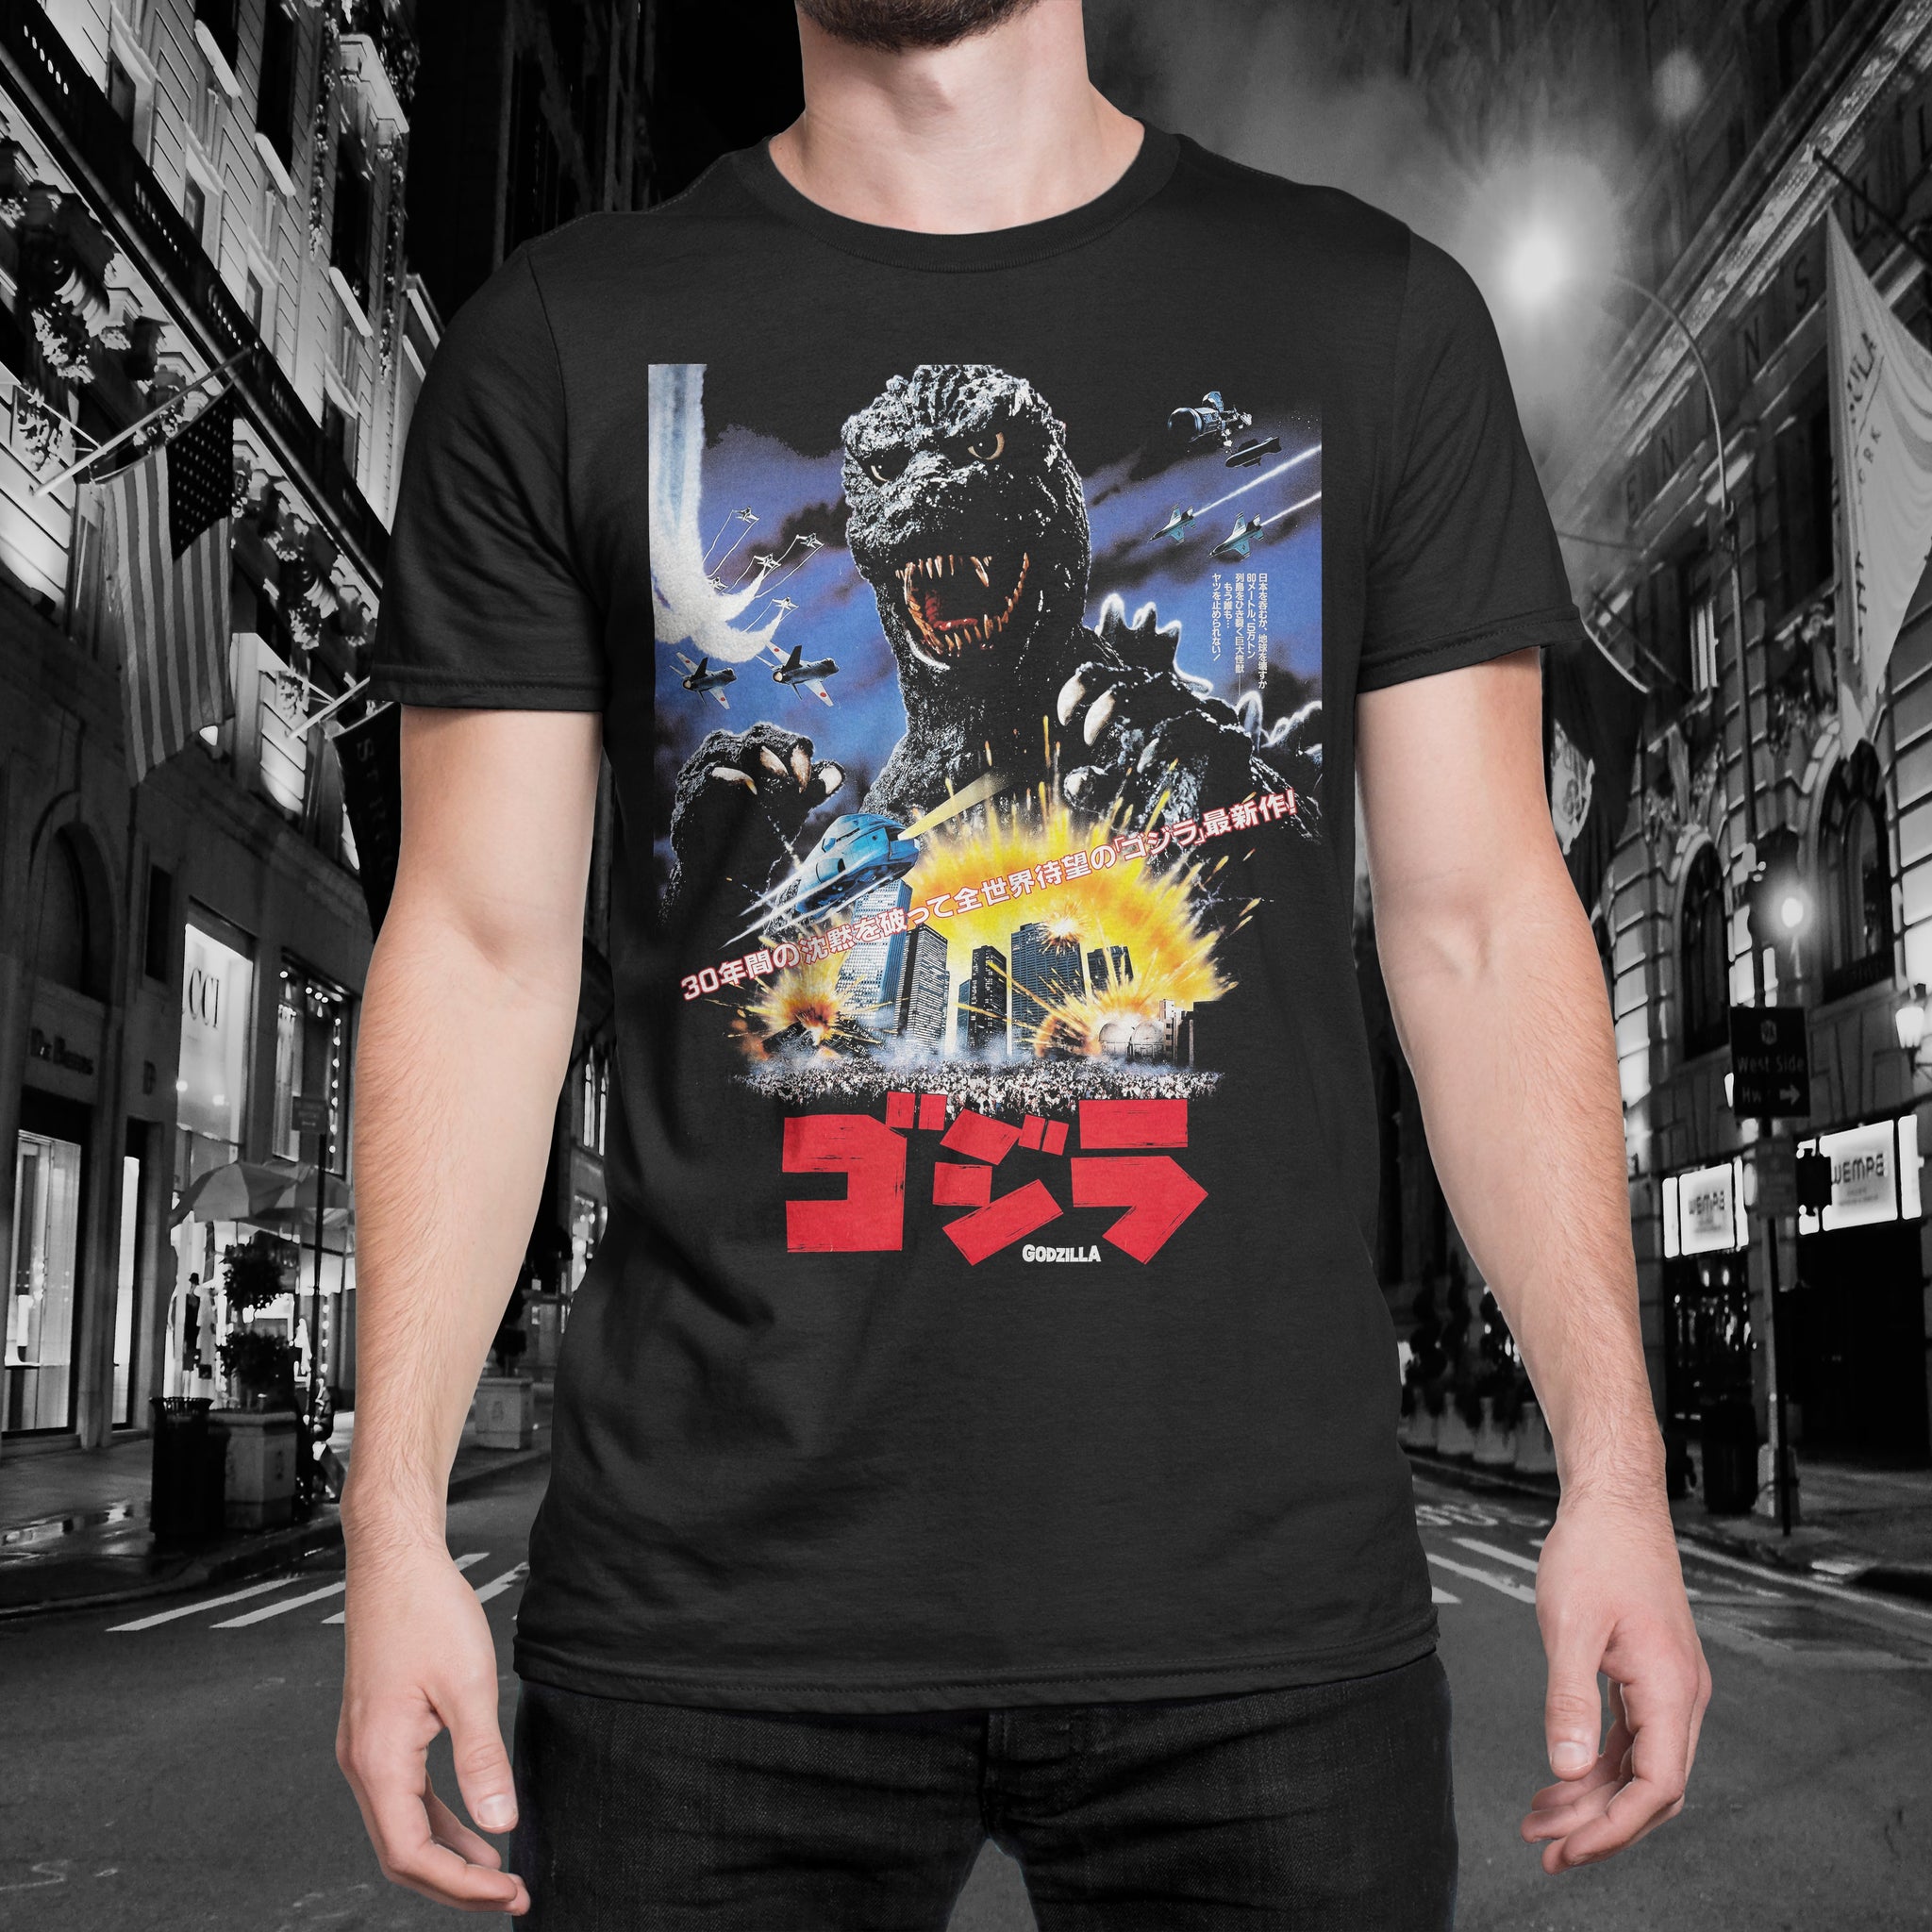 Return of Godzilla "Japan" Tee